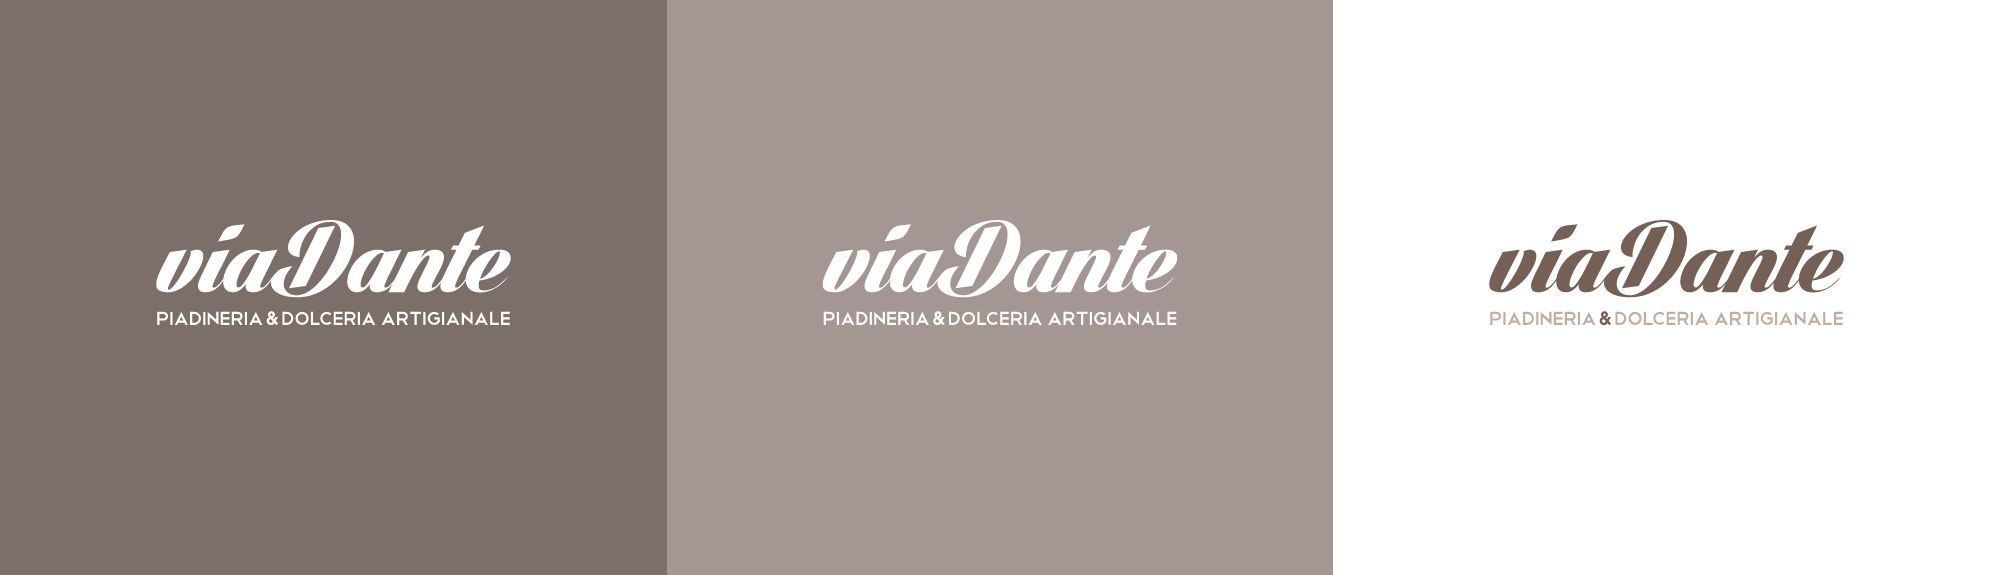 randomlab-progetti-via-dante-logo-background